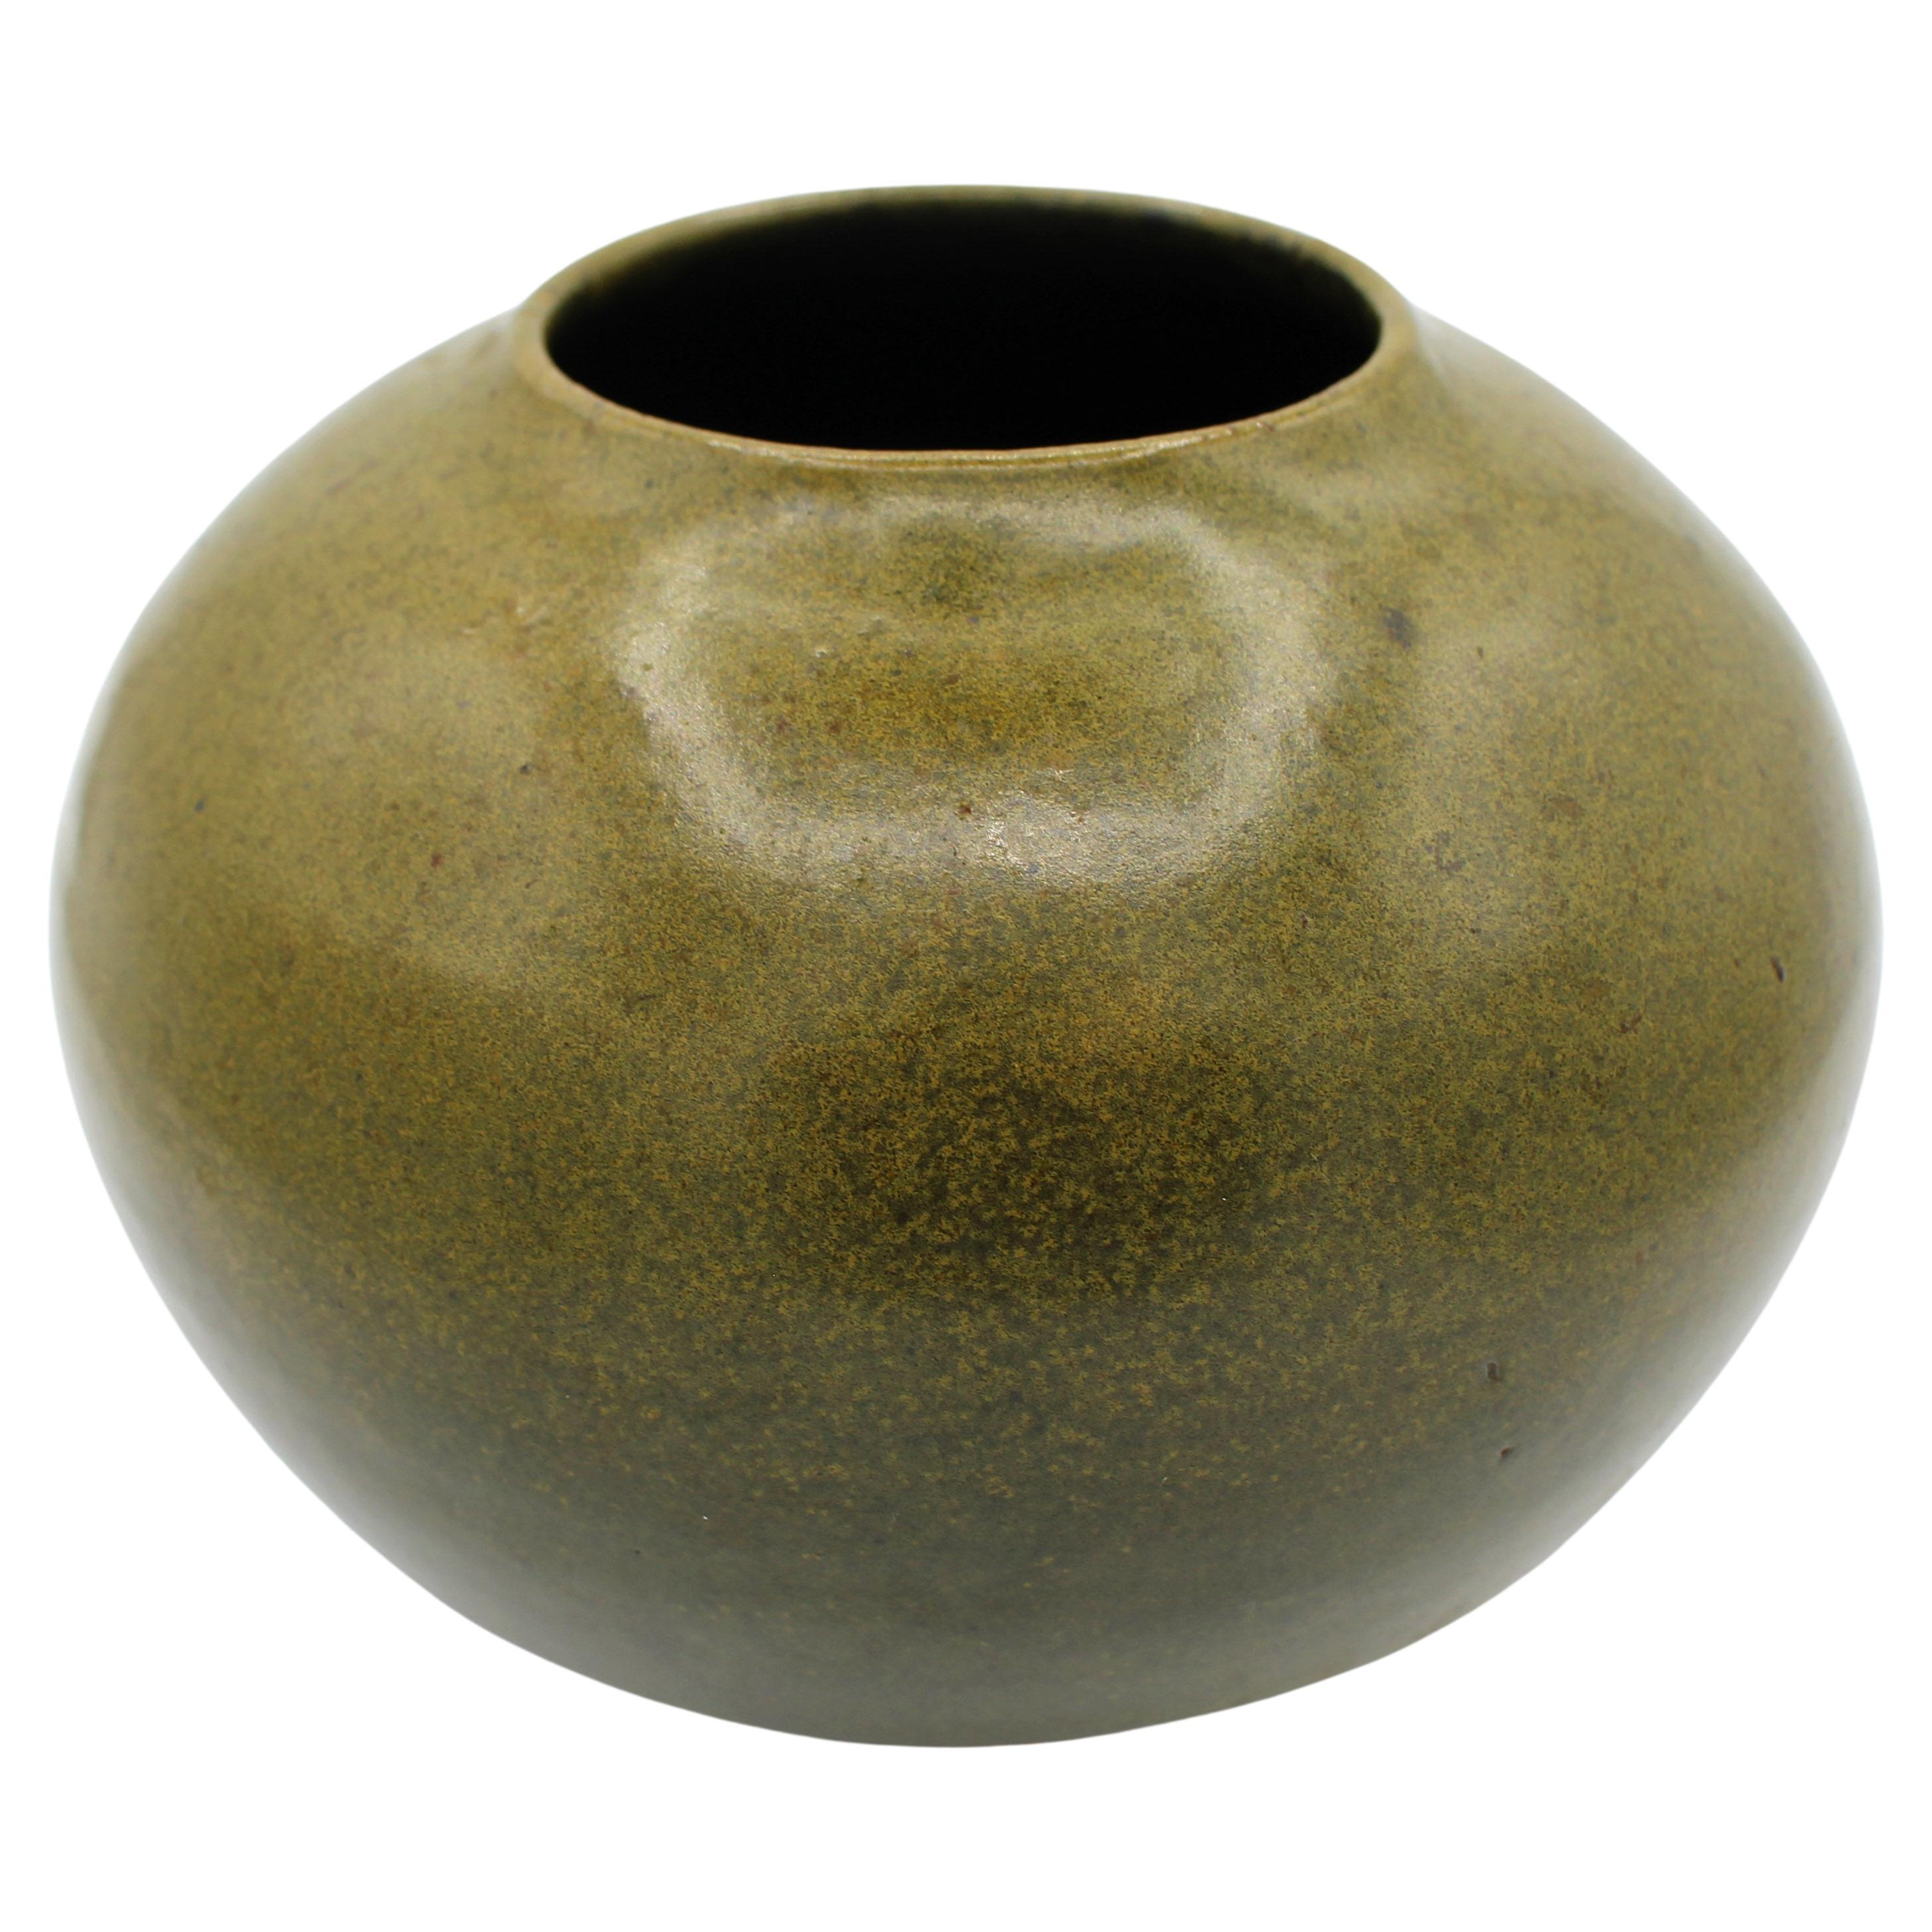 Mid-20th Century Jugtown Ware Pottery Vase